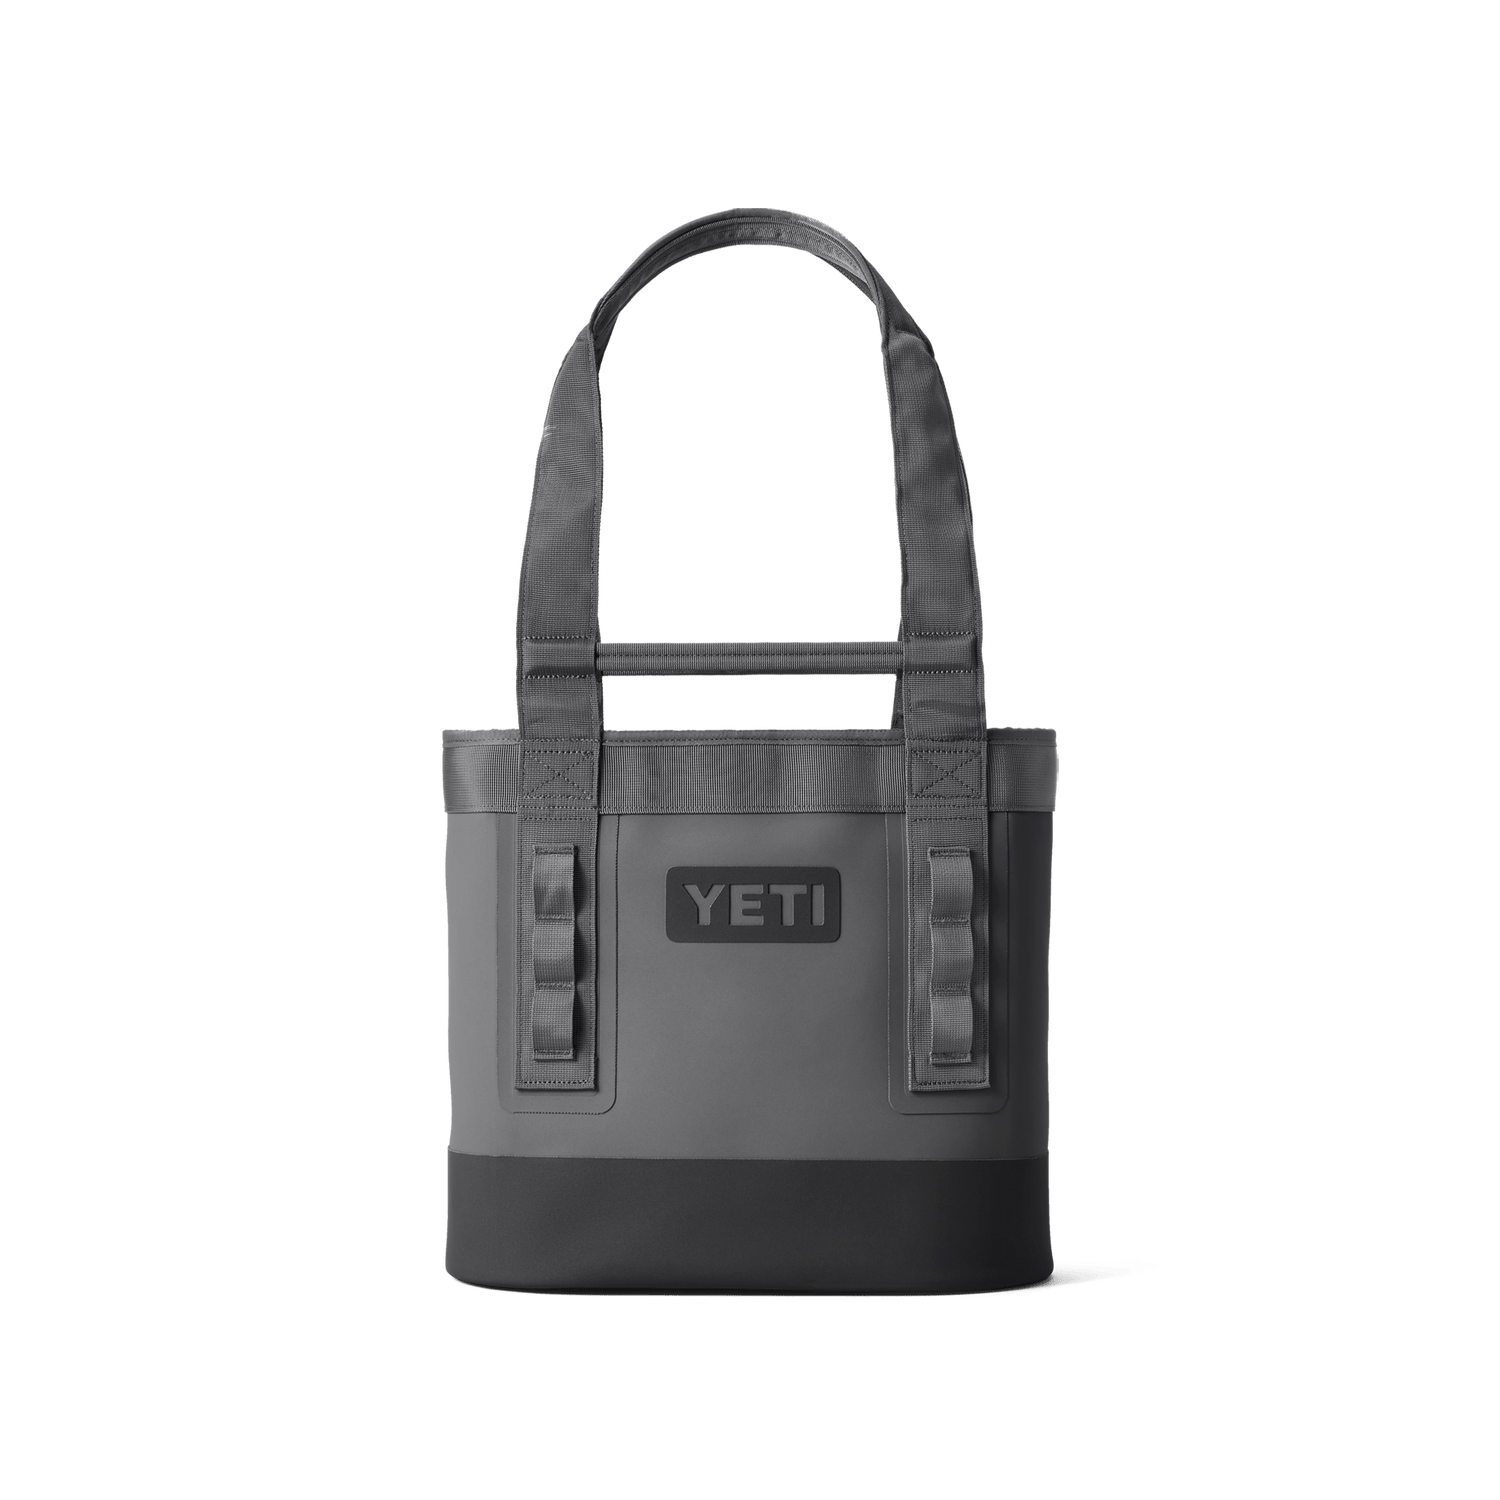 YETI Australia  Outdoor Gear Bag Collection